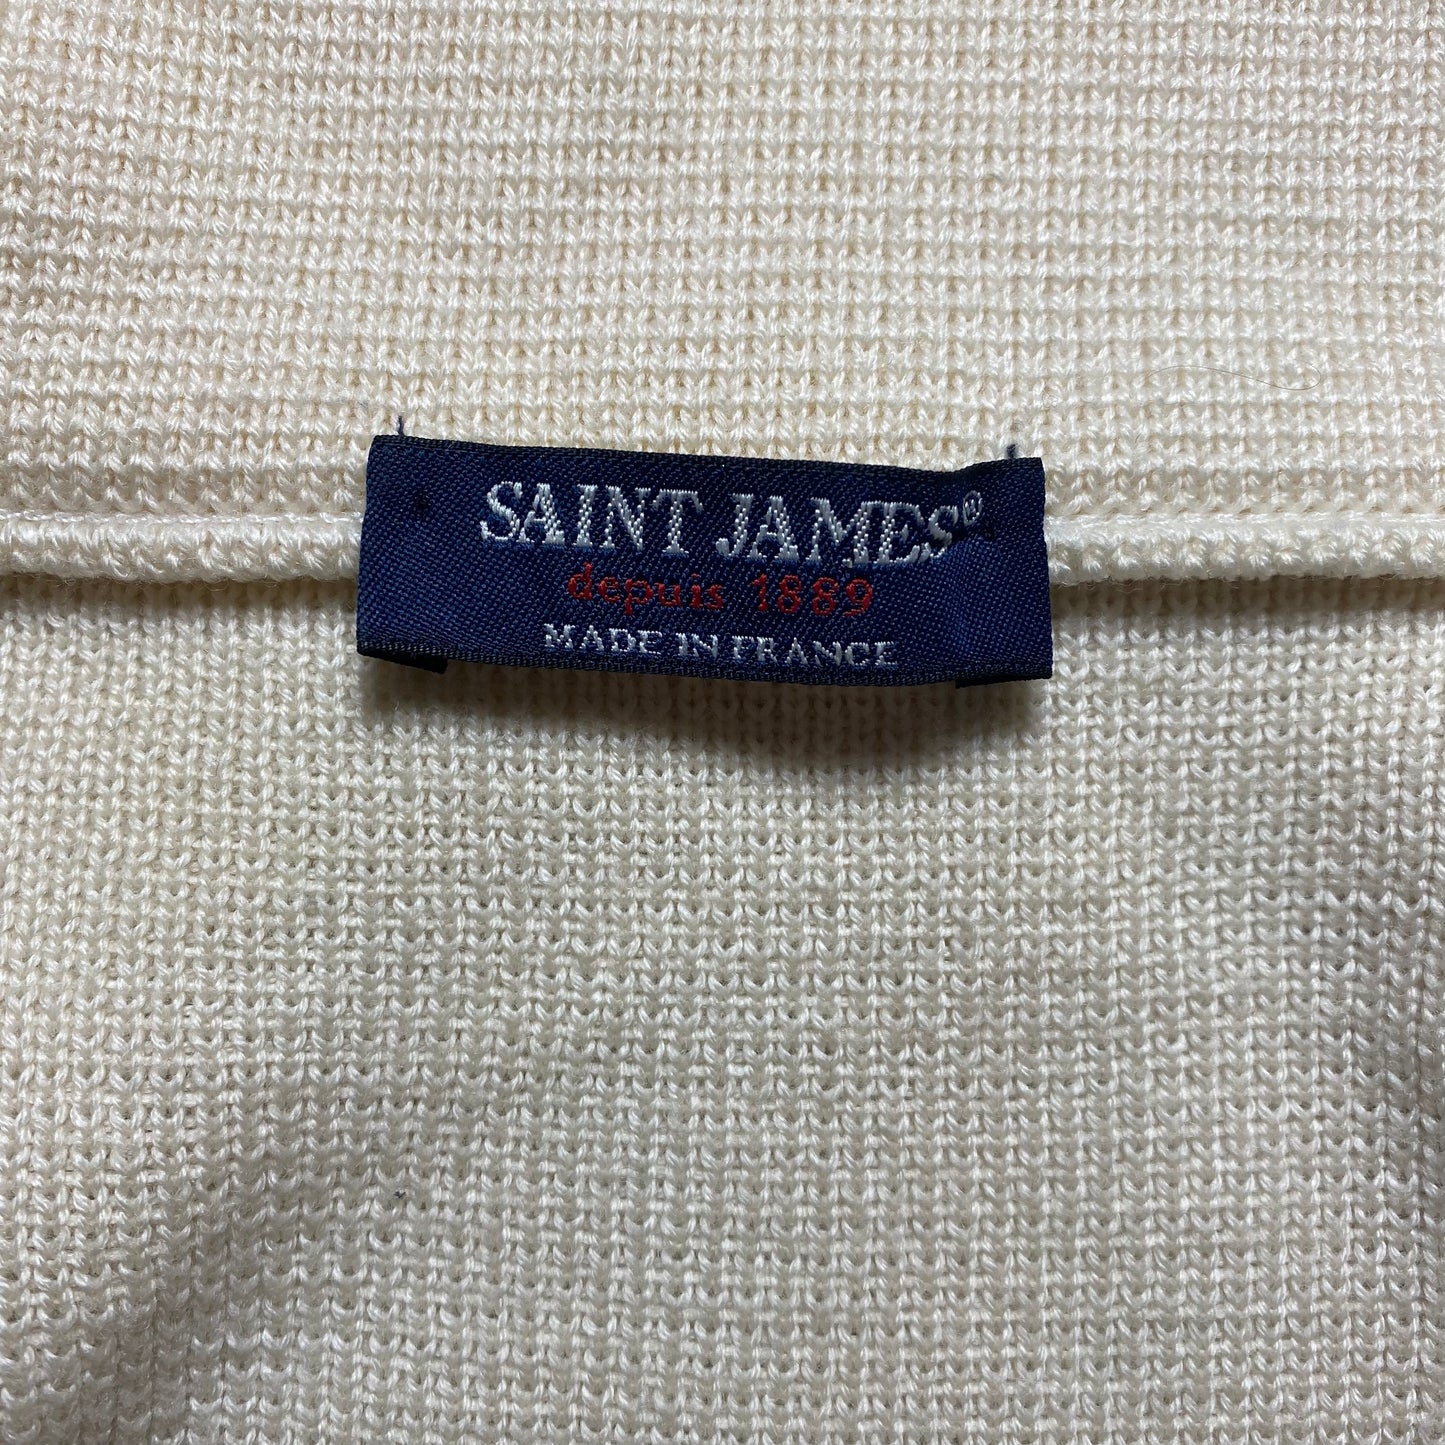 Saint James Cardigan Size Large